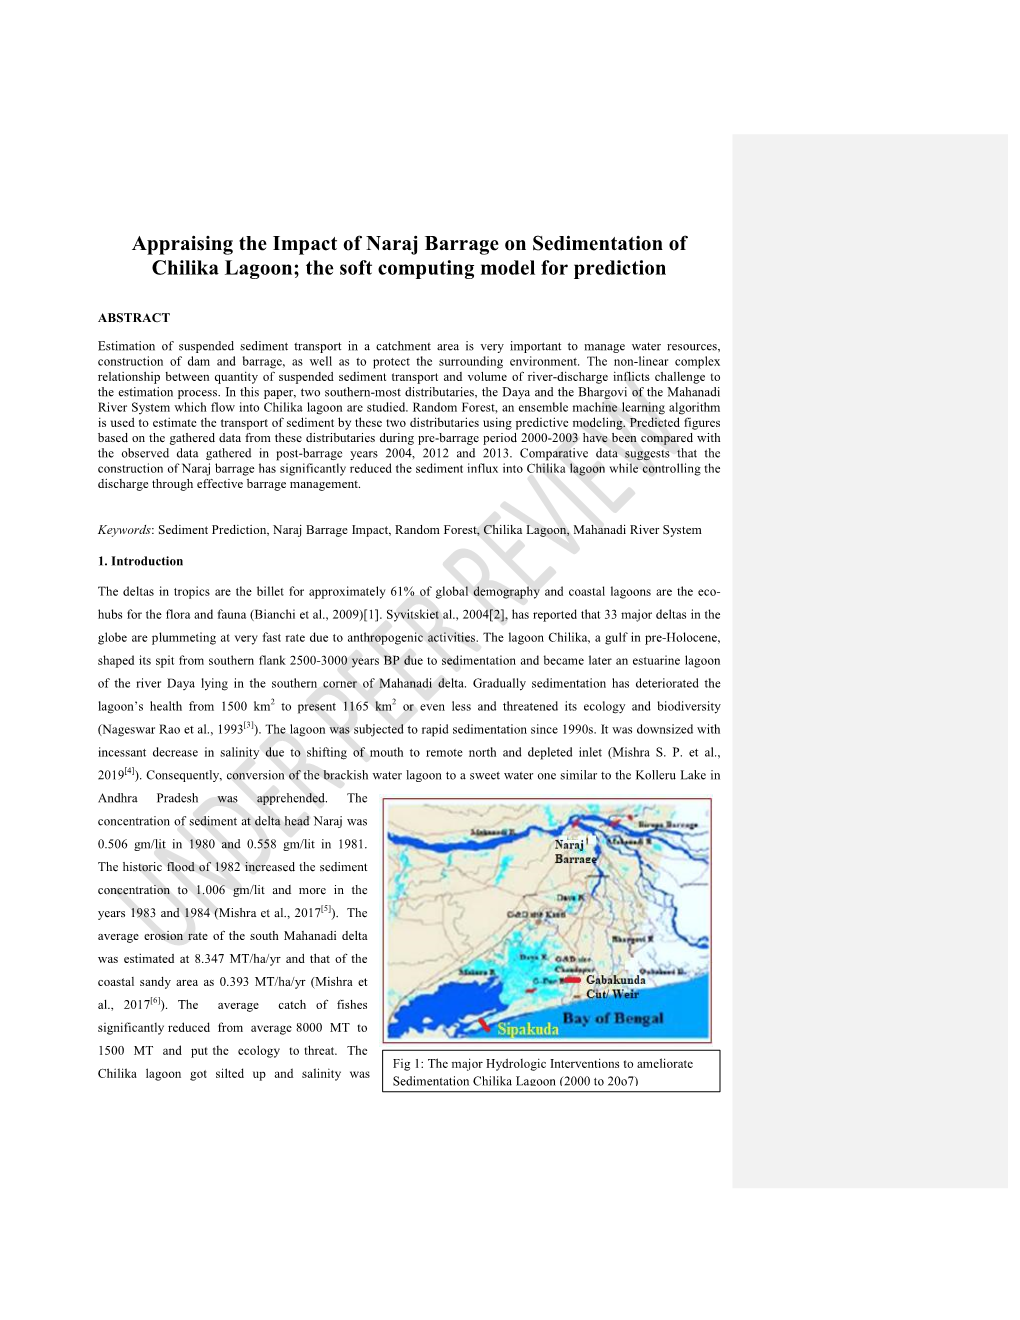 Appraising the Impact of Naraj Barrage on Sedimentation of Chilika Lagoon; the Soft Computing Model for Prediction